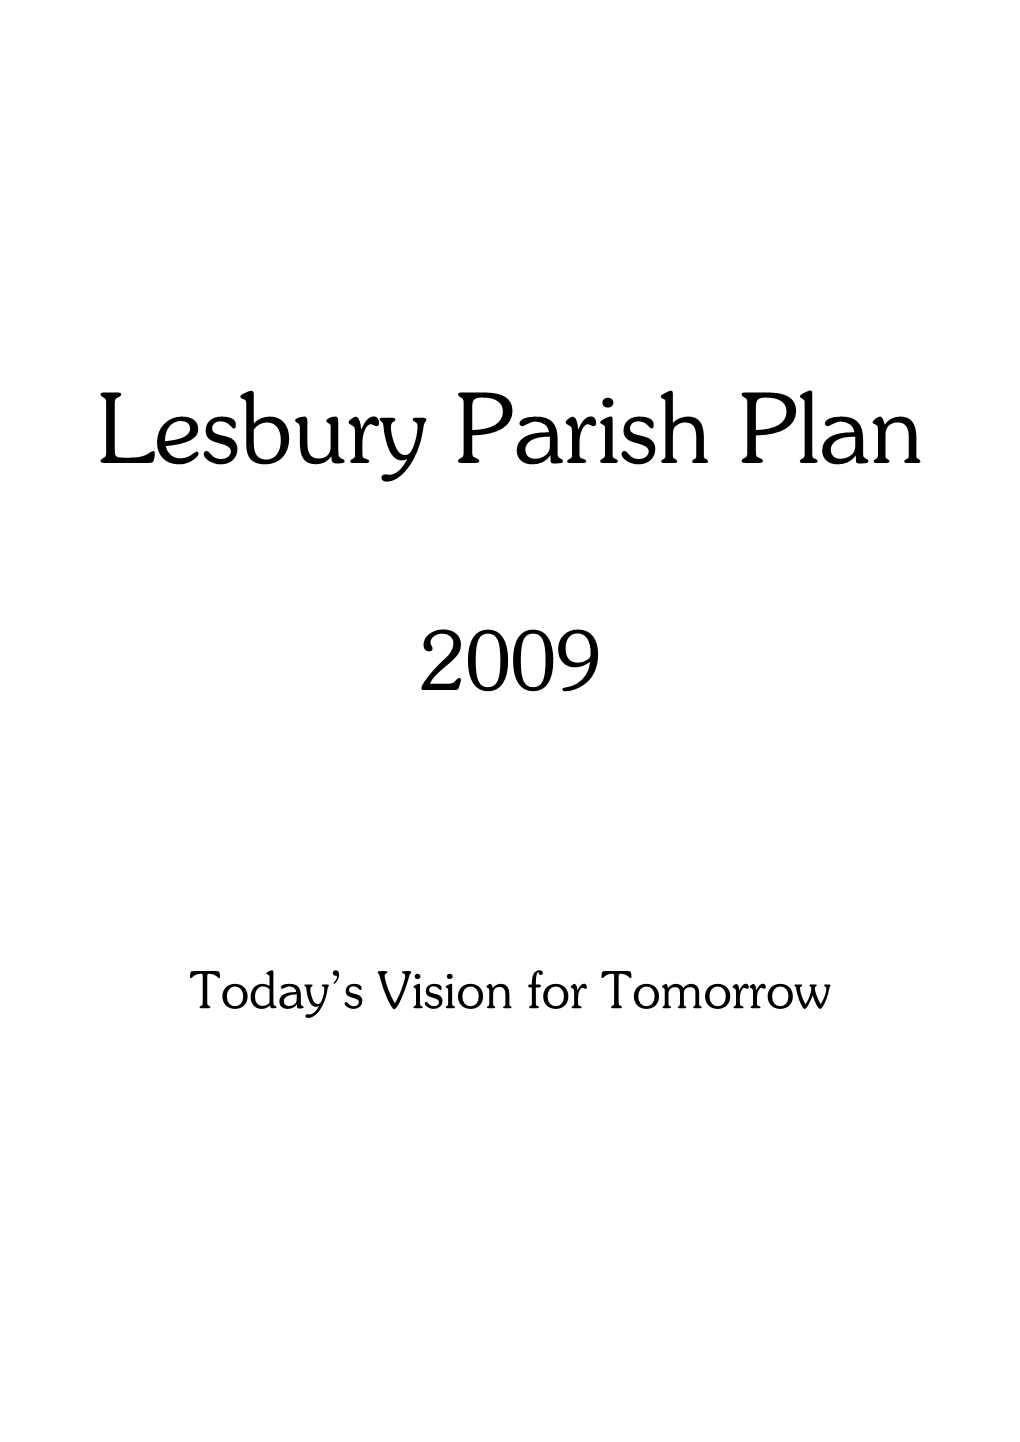 Lesbury Parish Plan Final Document.Pdf